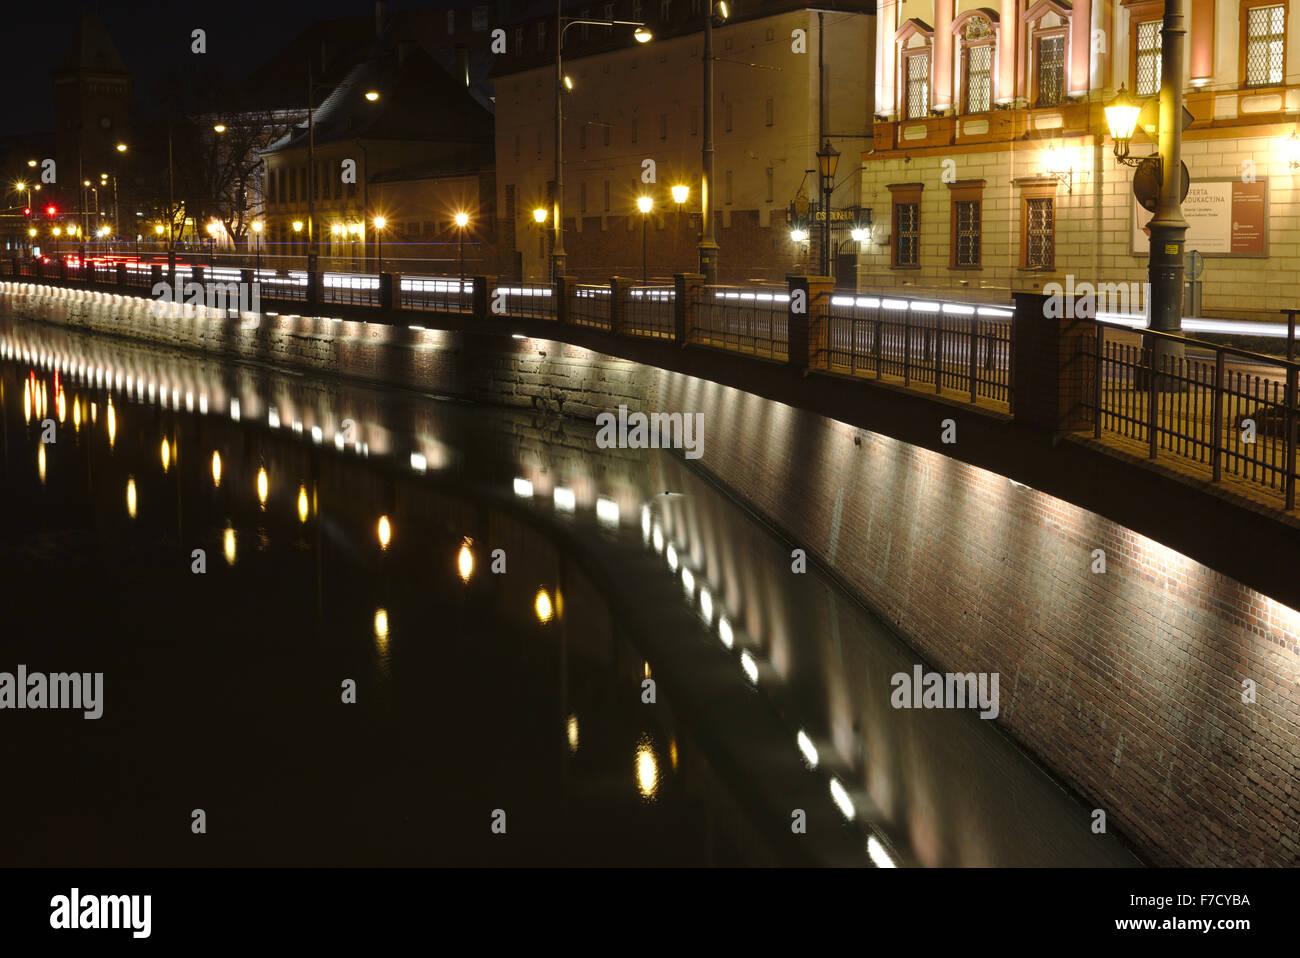 Grodzka Street in Wroclaw, at night Stock Photo